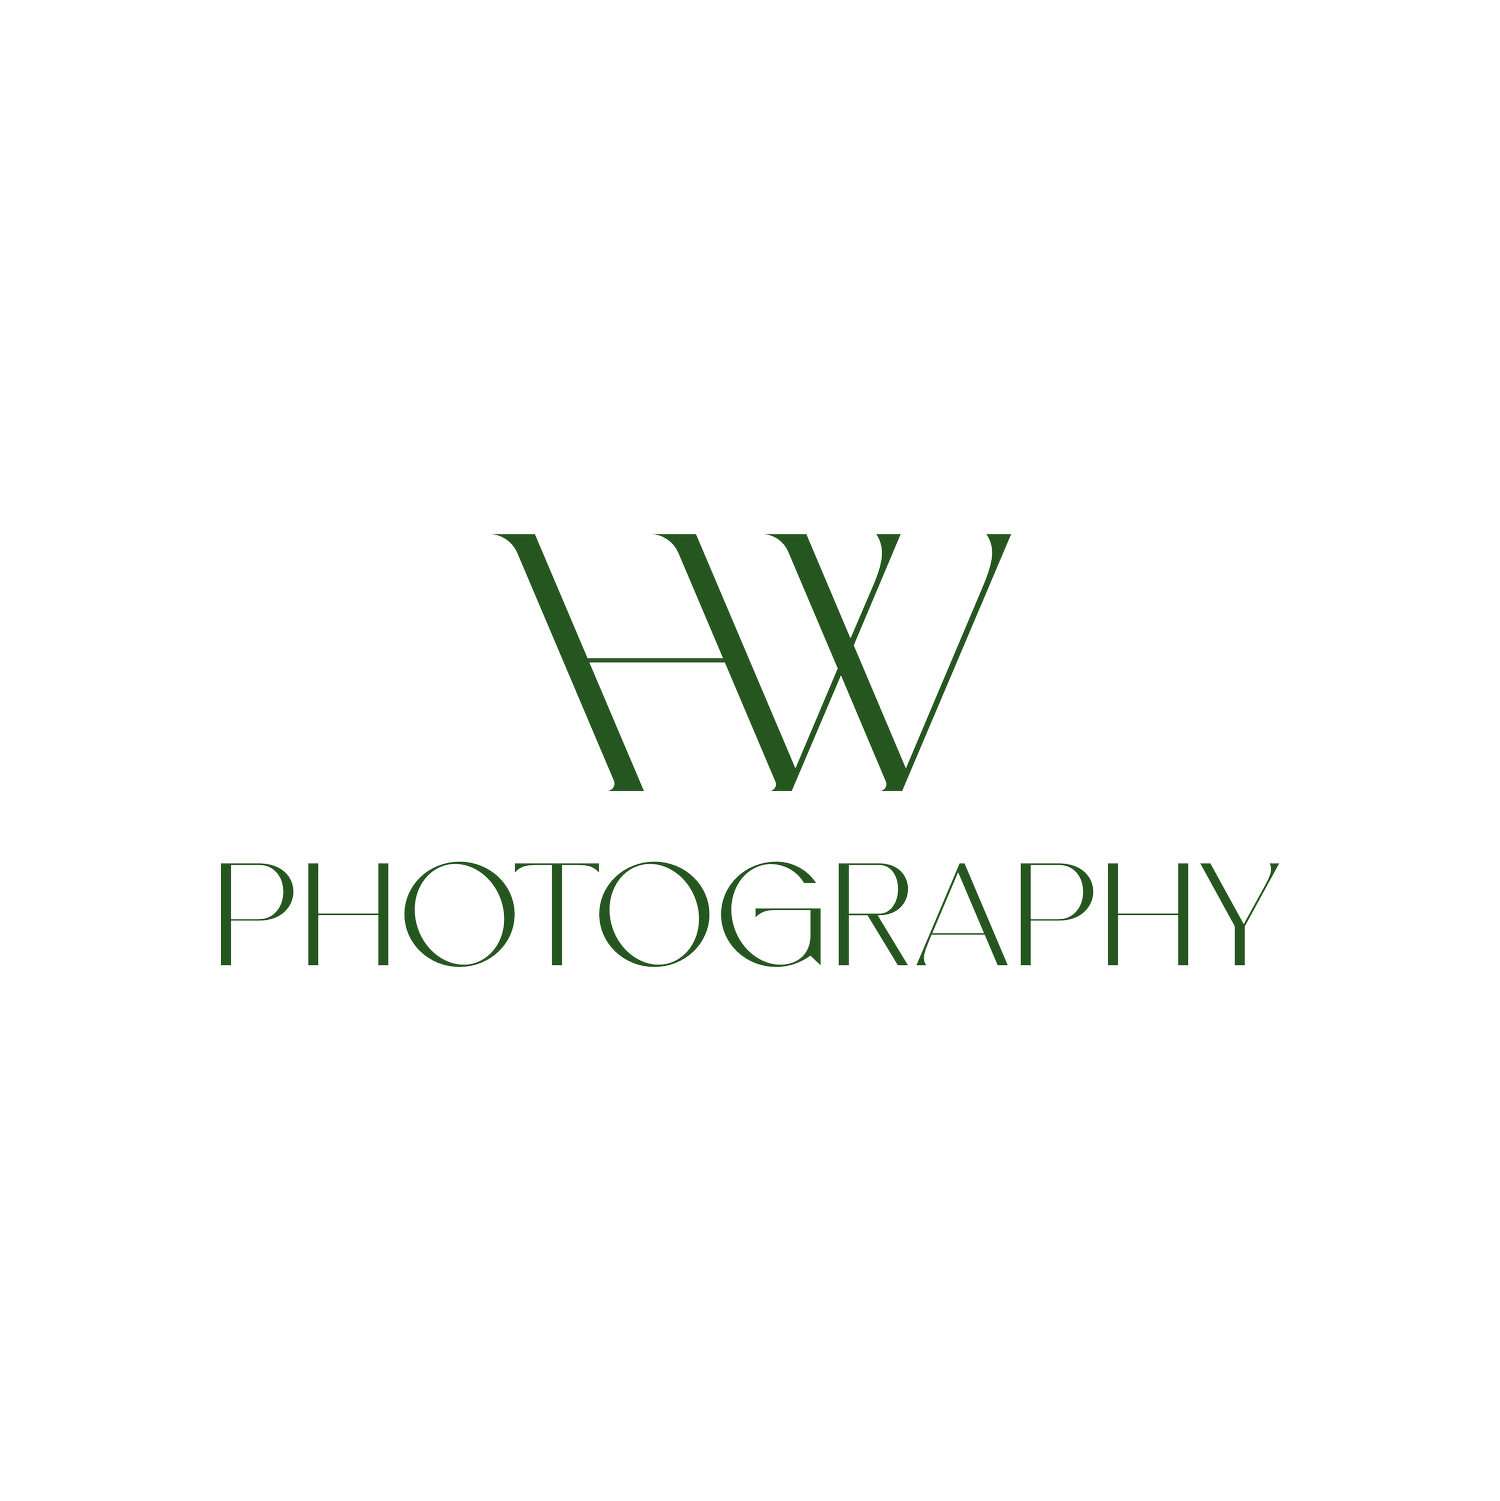 HW Photography